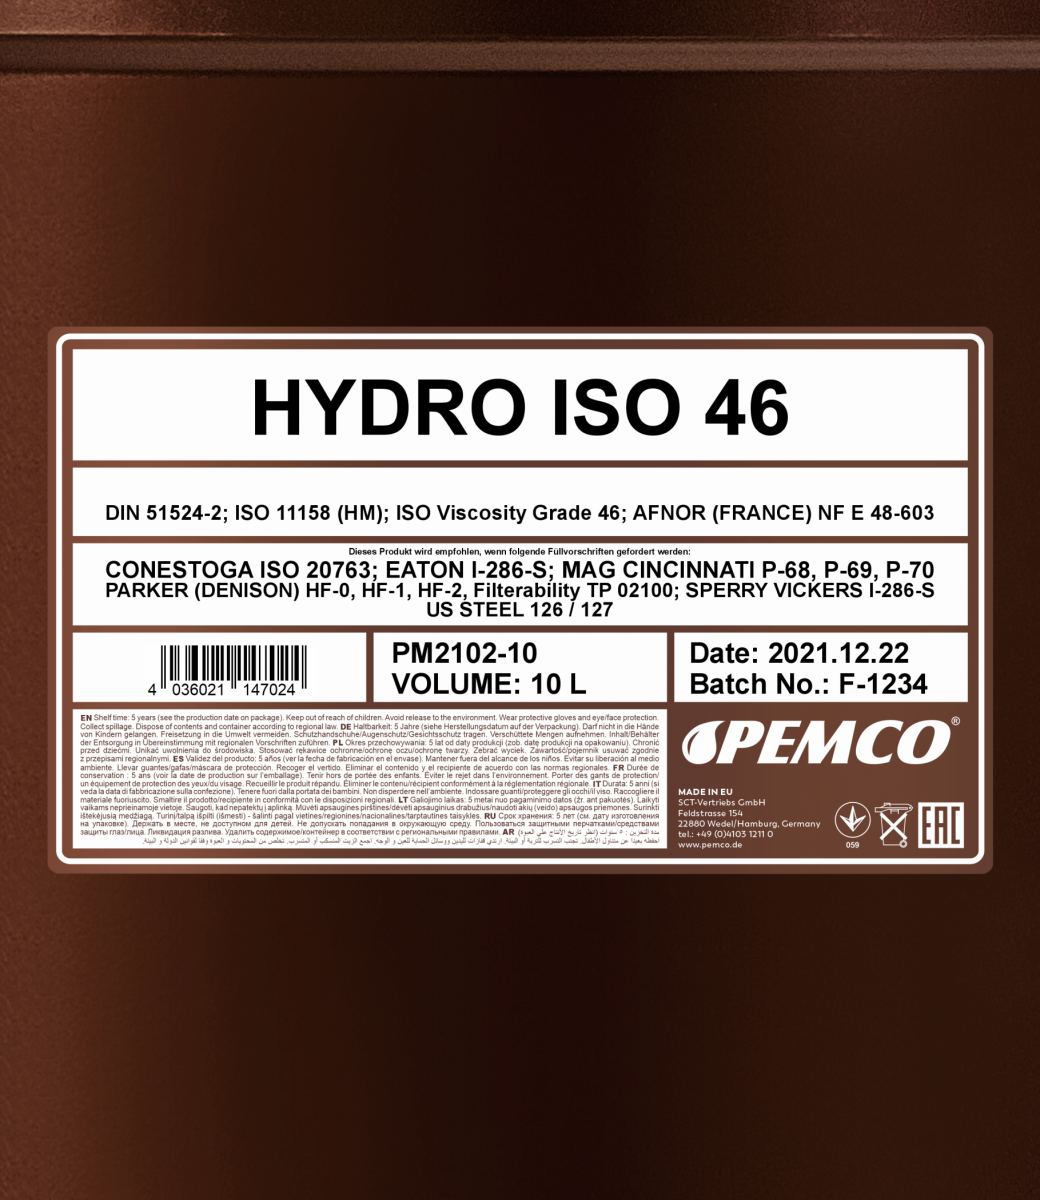 Pemco - Hydro ISO 46